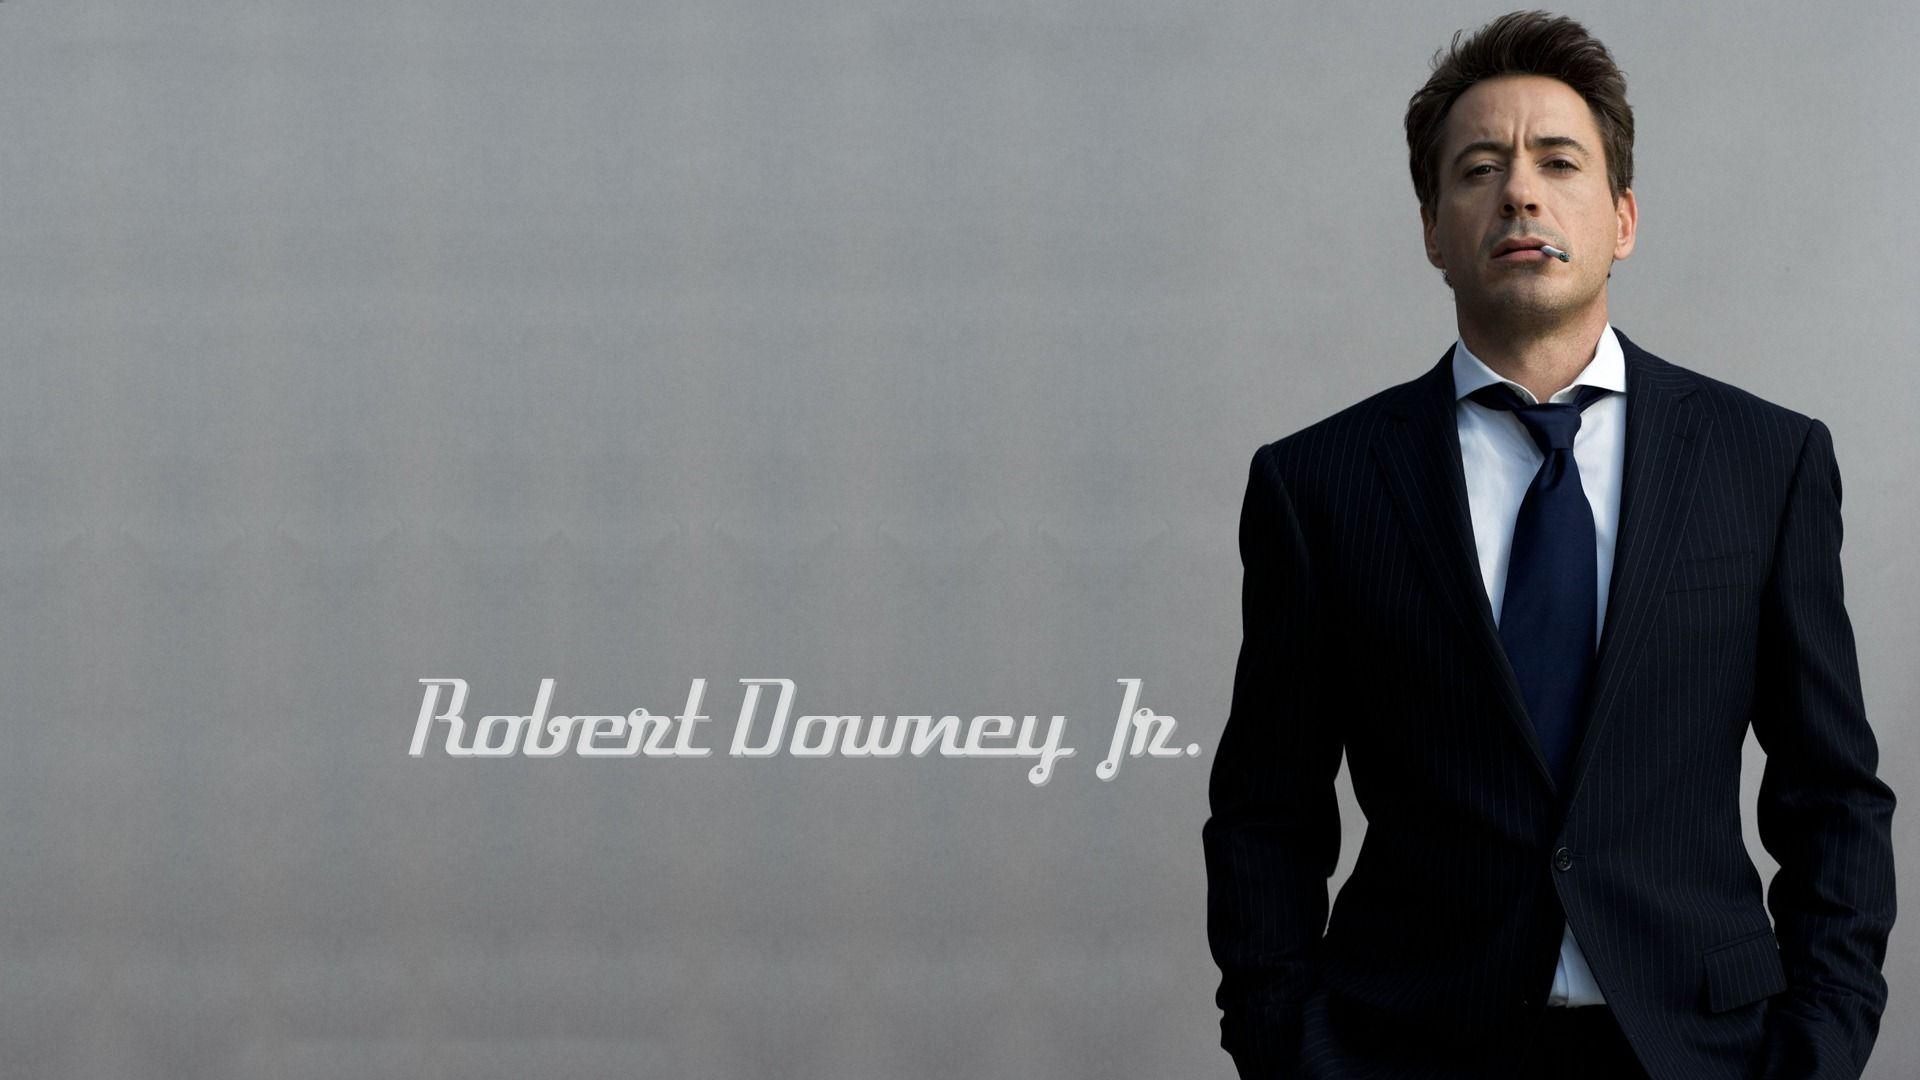 Robert Downey Jr HD Wallpaper for desktop download